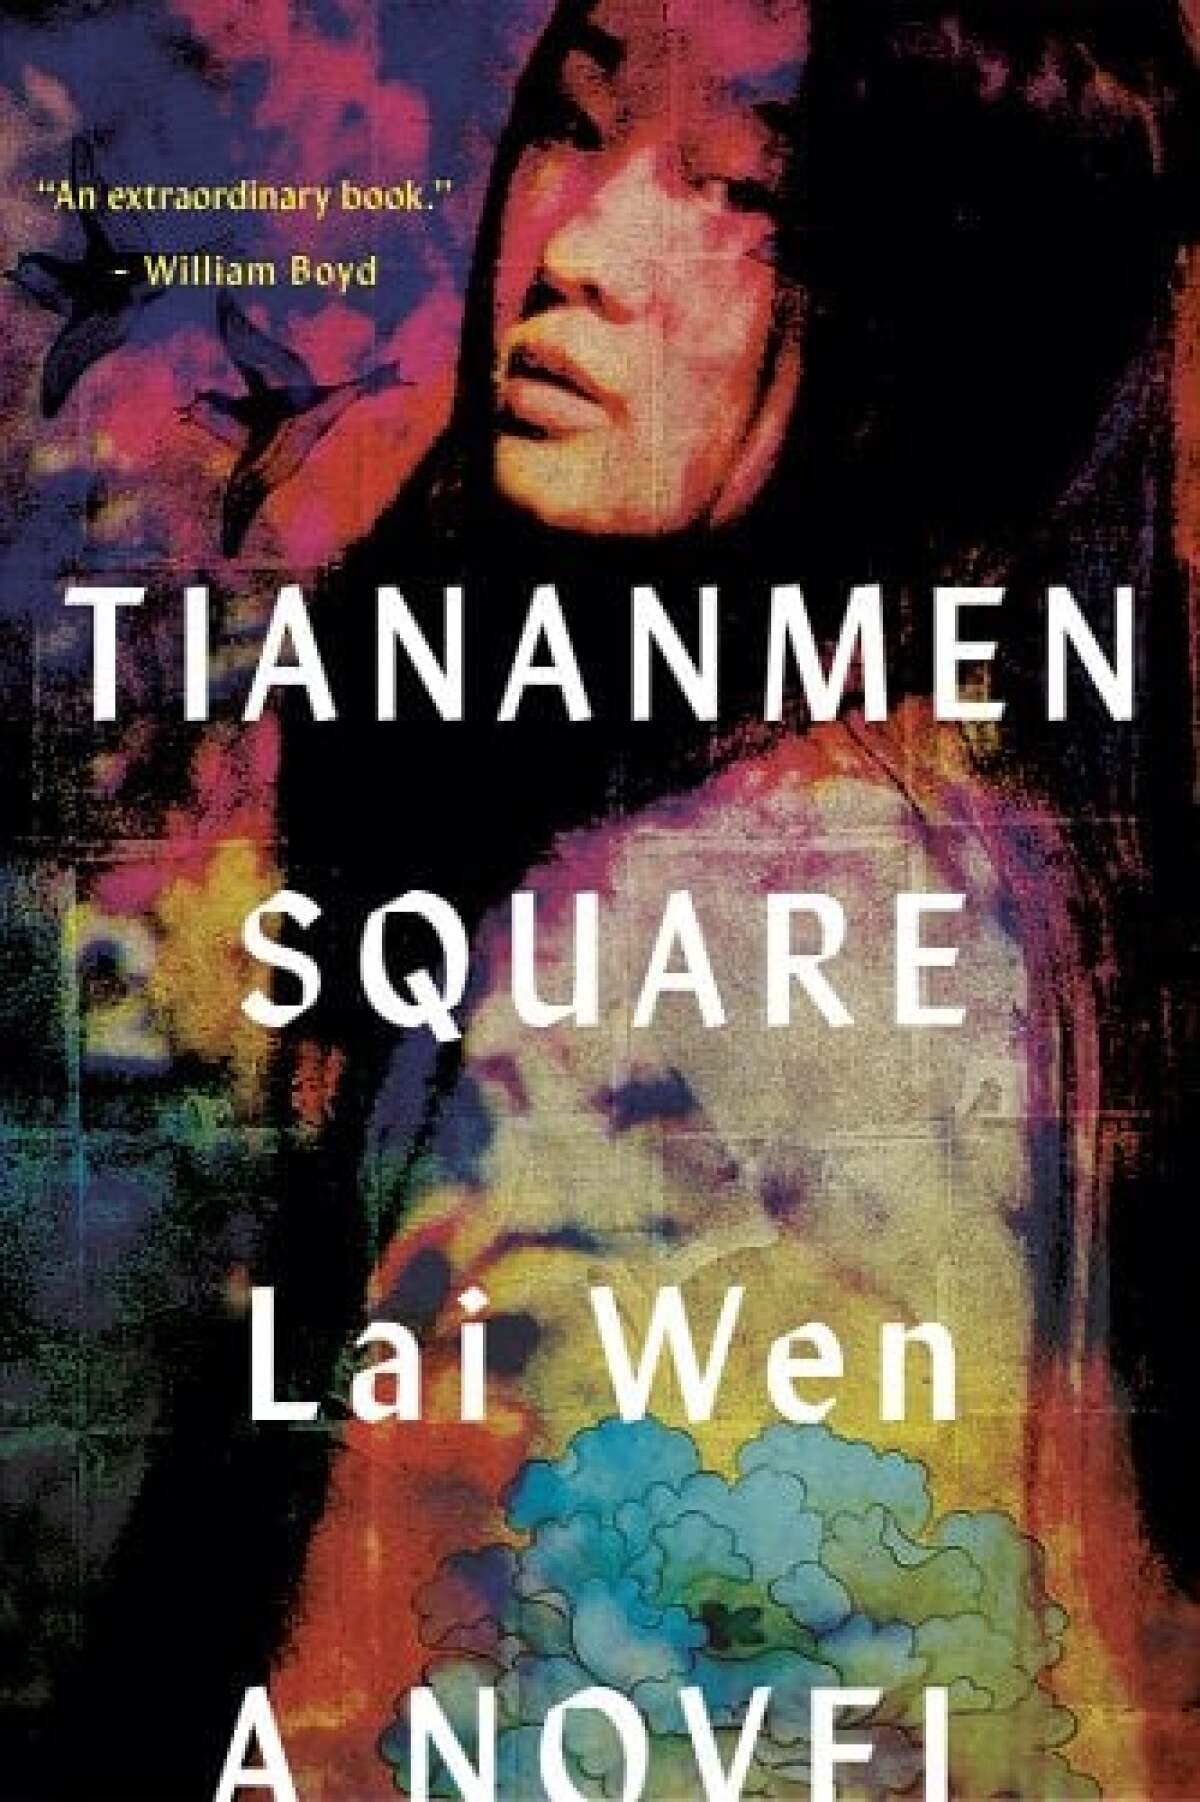 The cover of "Tiananmen Square"